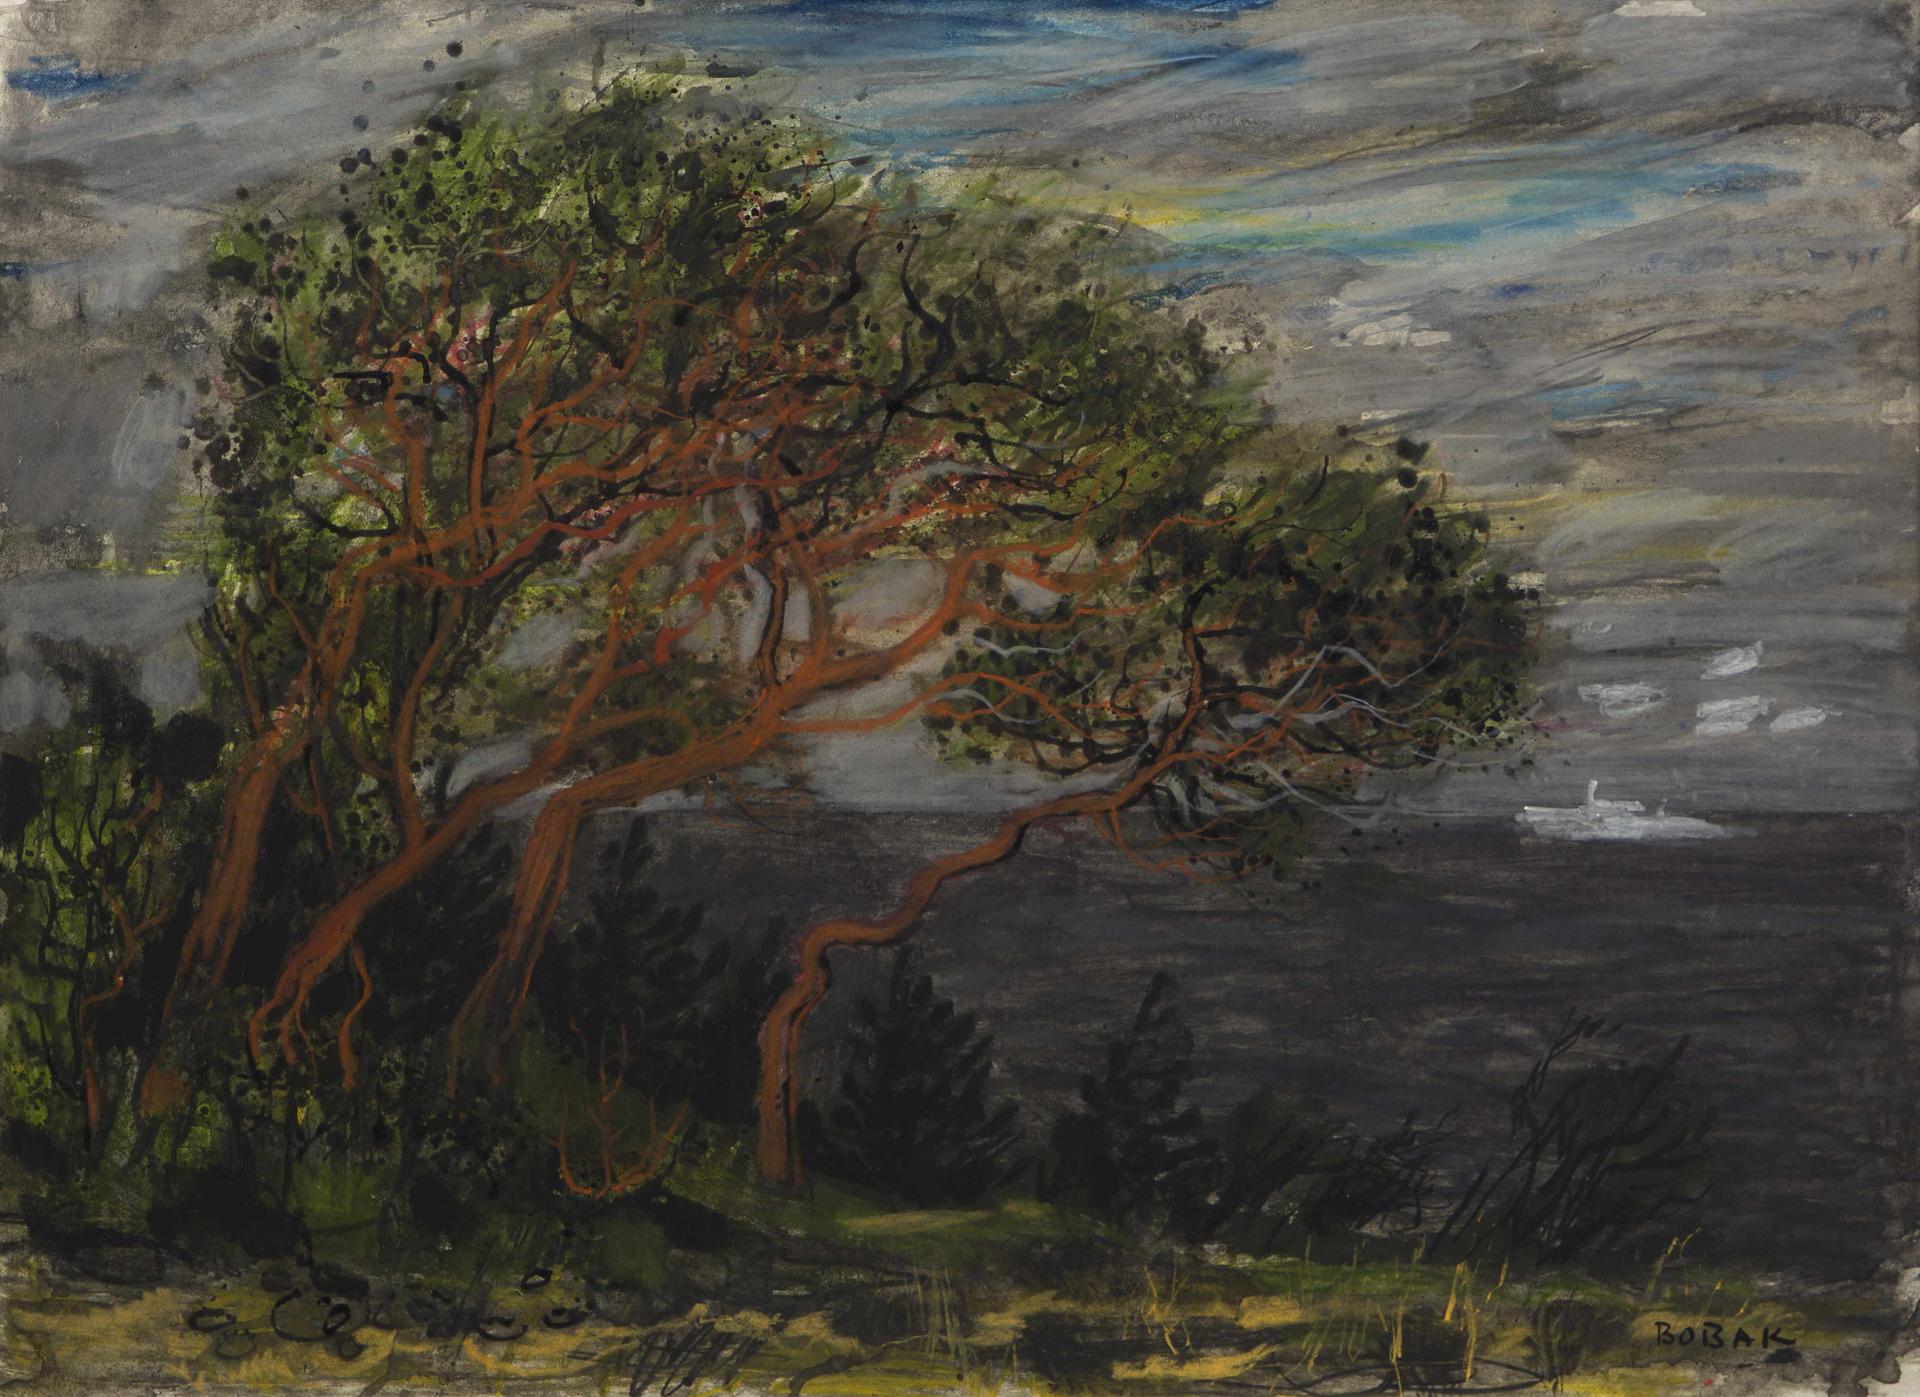 Bruno Joseph Bobak (1923-2012) - Arbutus Trees (Galiano Island), n.d.